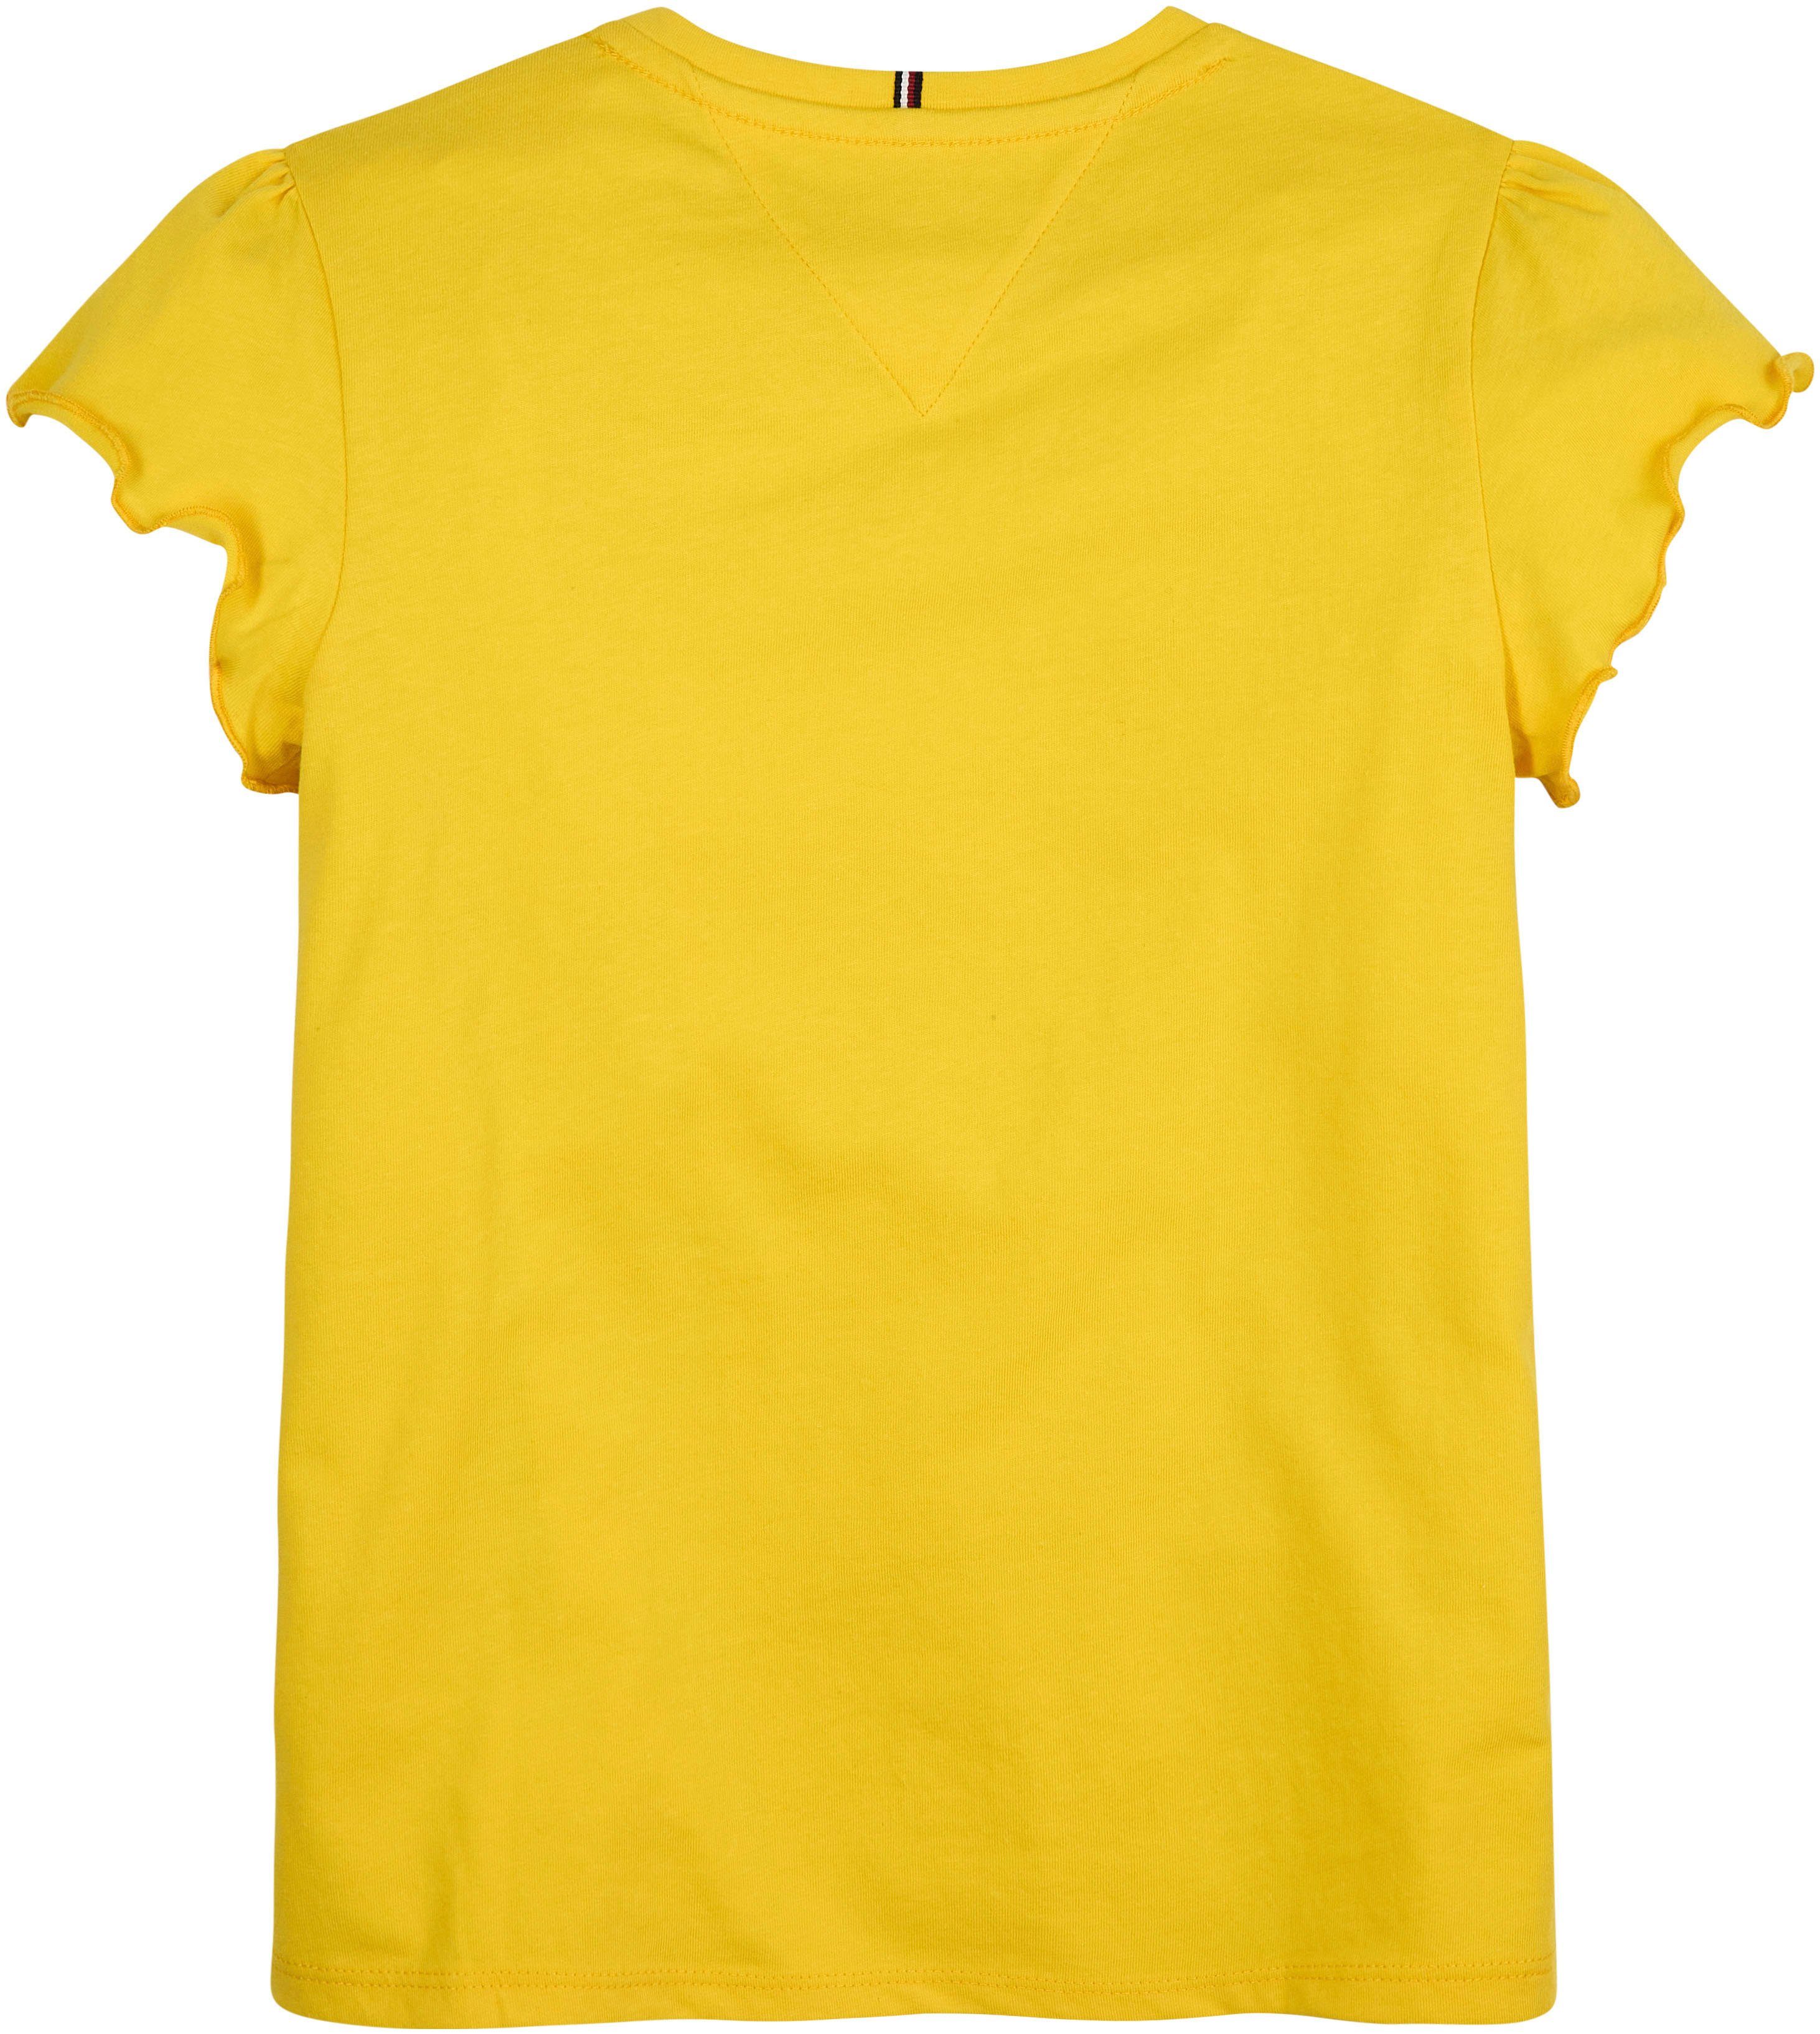 Babys TOP ESSENTIAL Star_Fruit_Yellow RUFFLE T-Shirt Tommy Hilfiger SLEEVE für